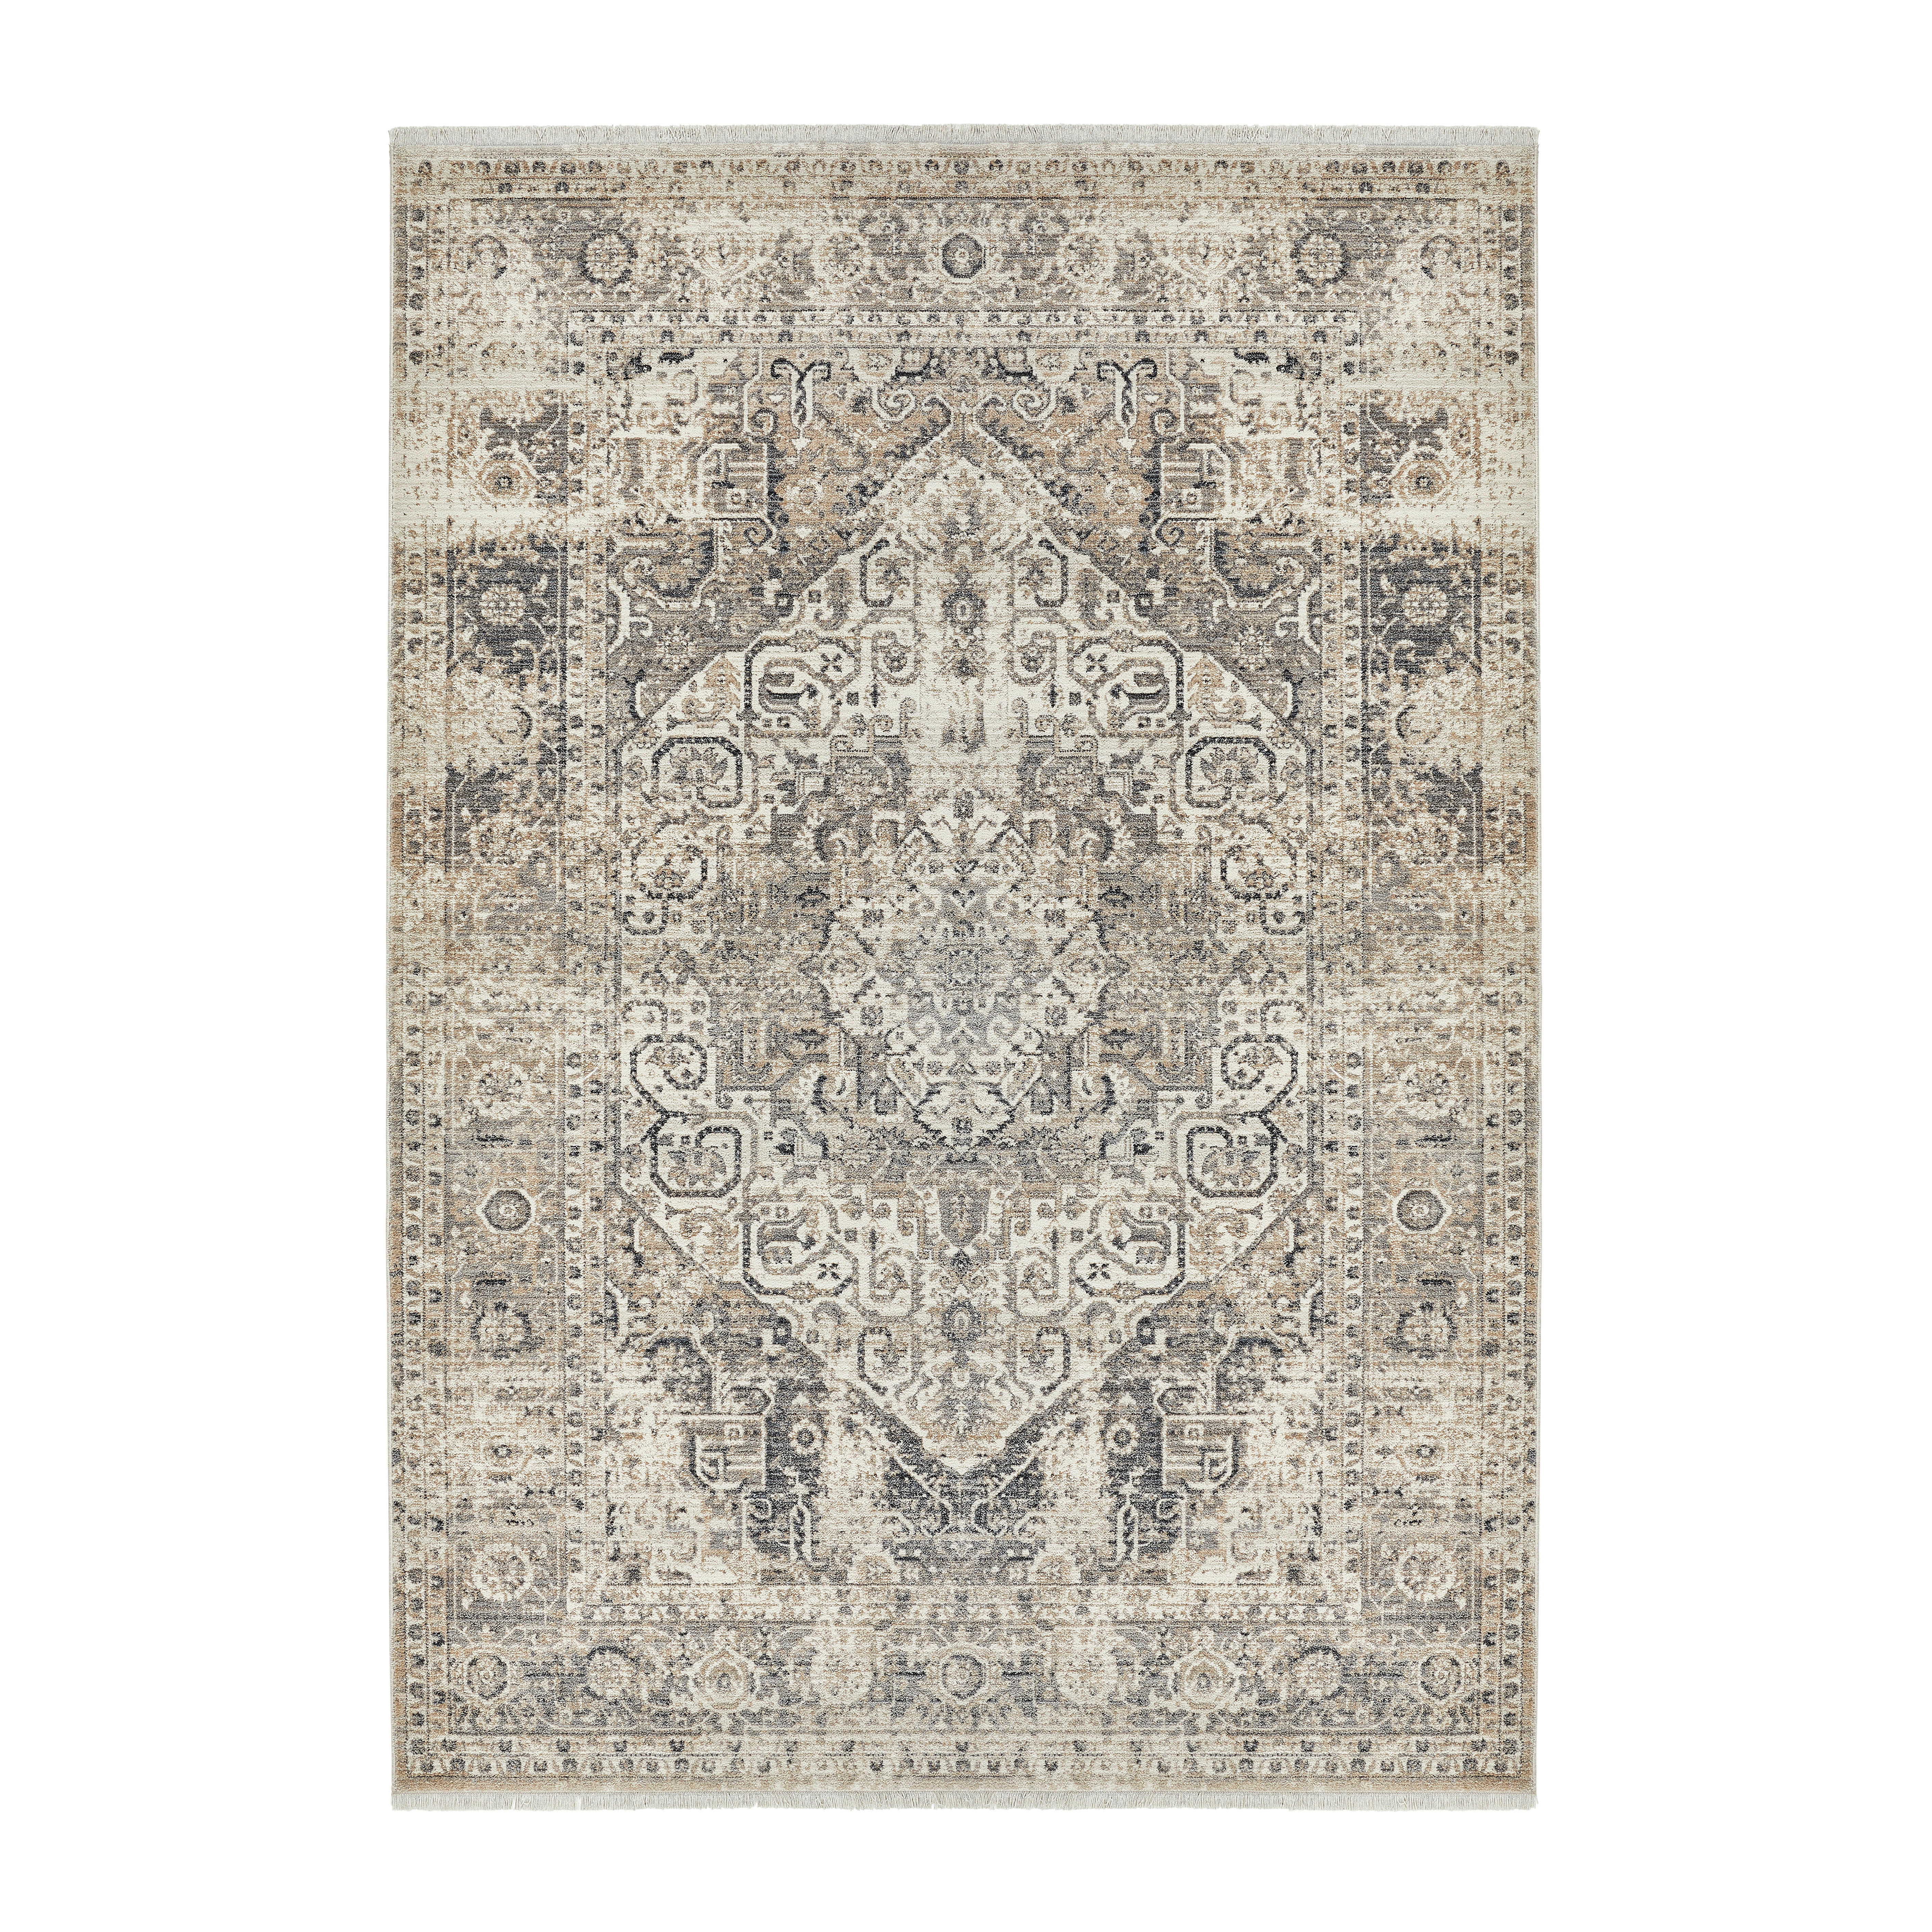 VINTAGE MATTA Samarkand  - beige/grå, Lifestyle, textil (120/153cm) - Novel